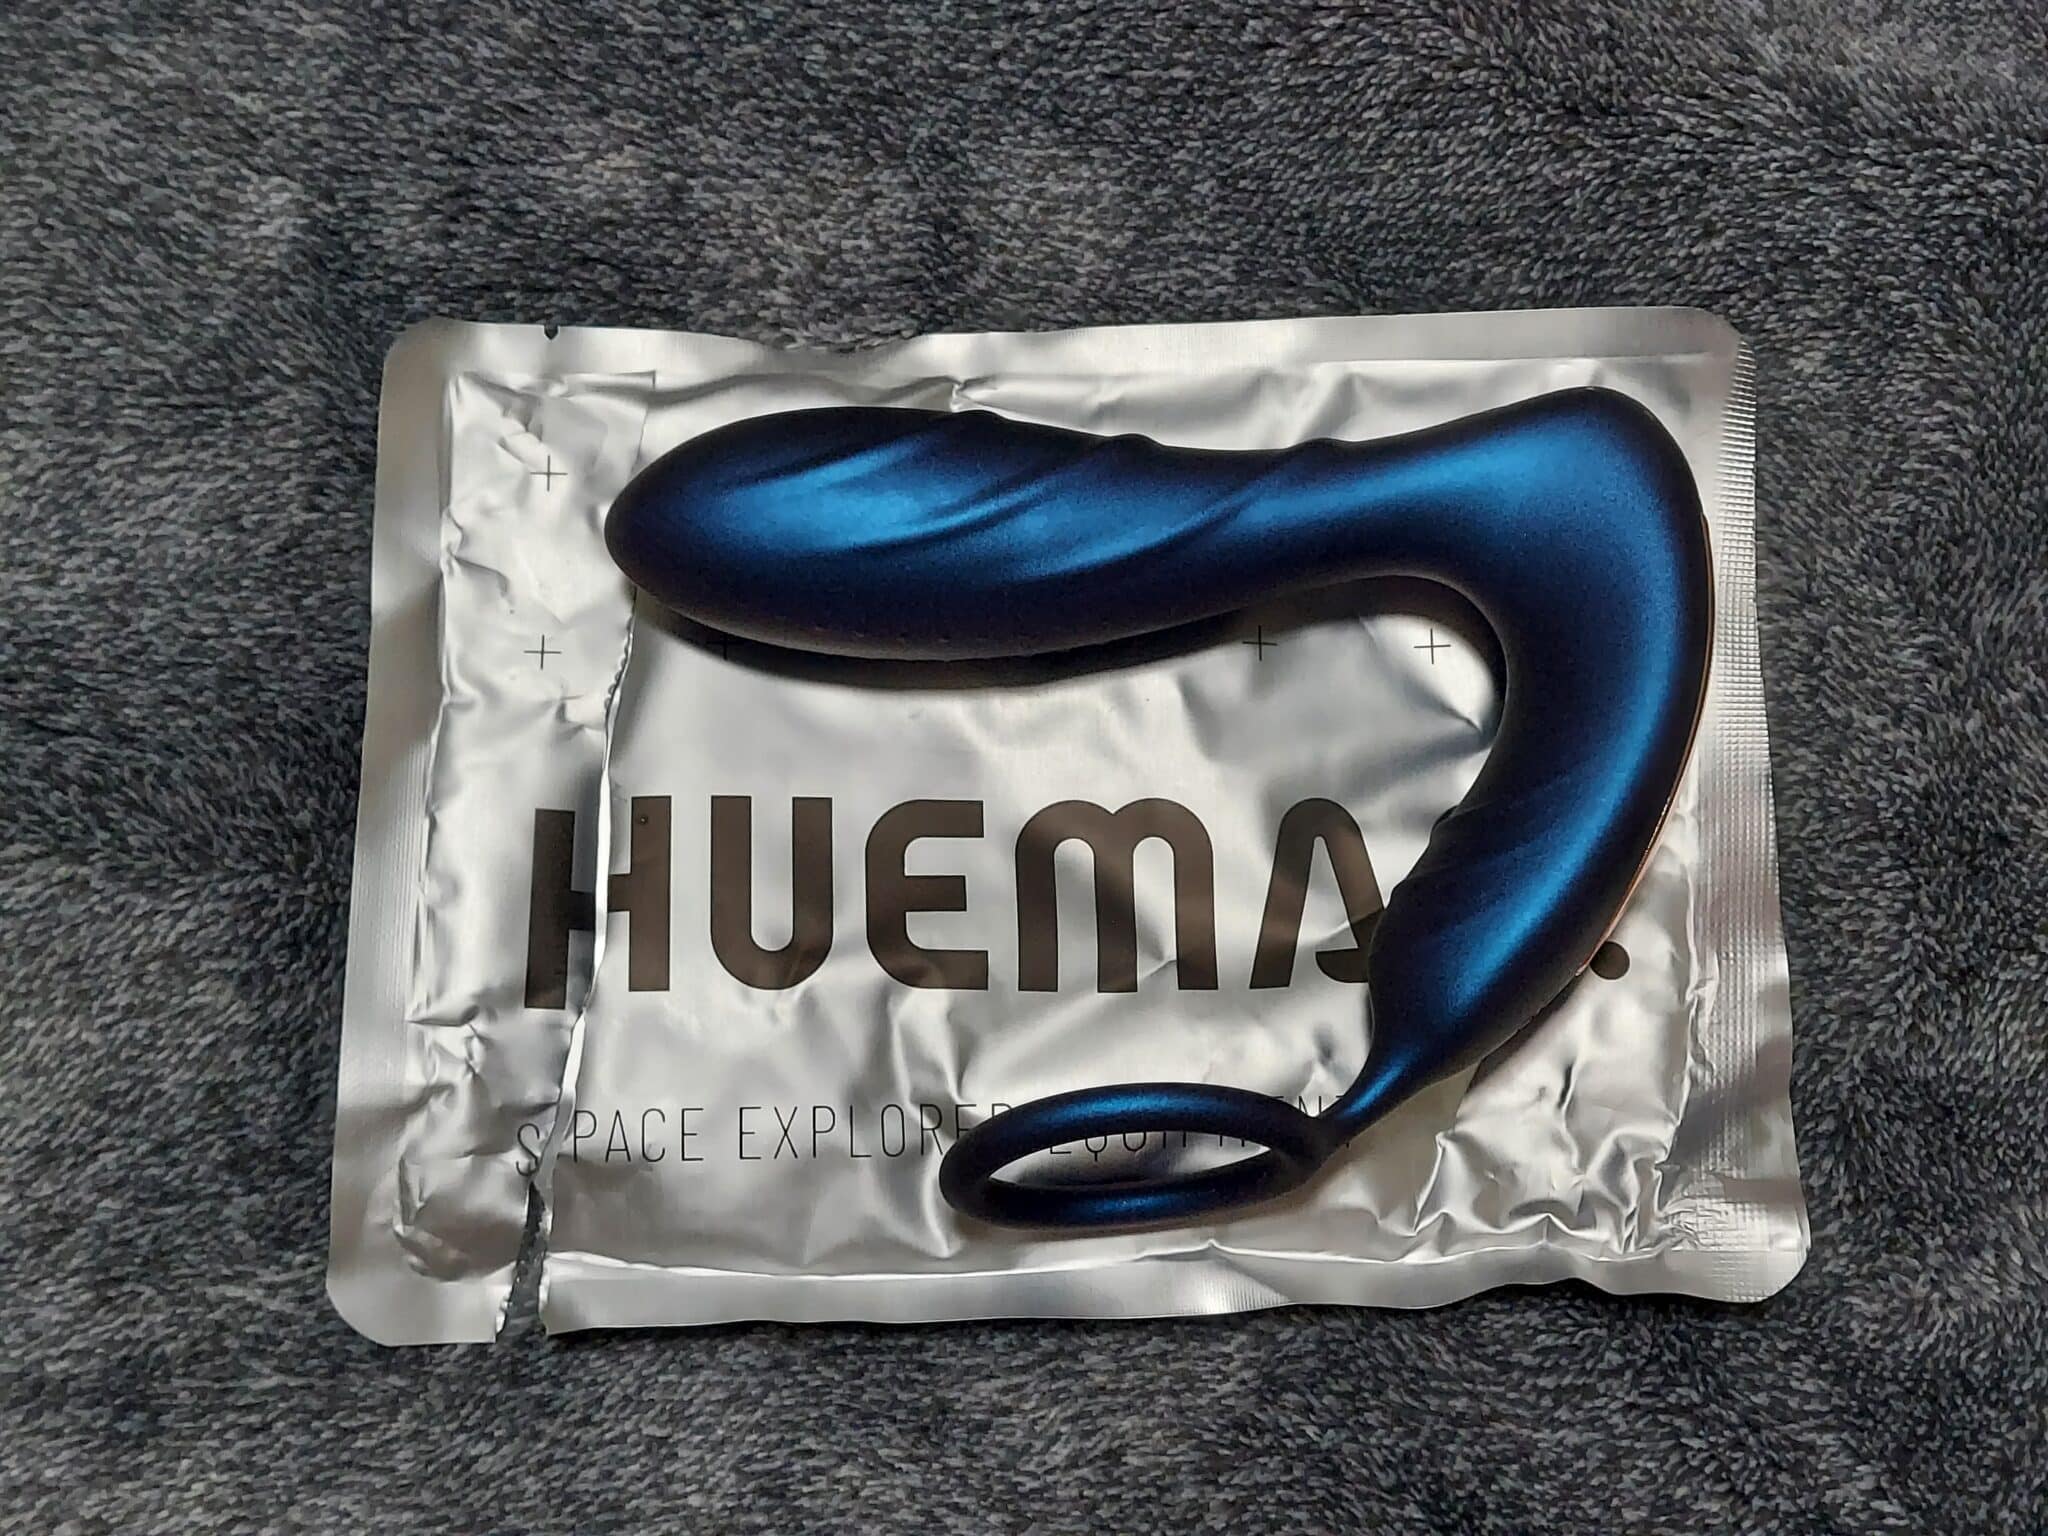 Hueman Black Hole Superior Quality or Just Hype?